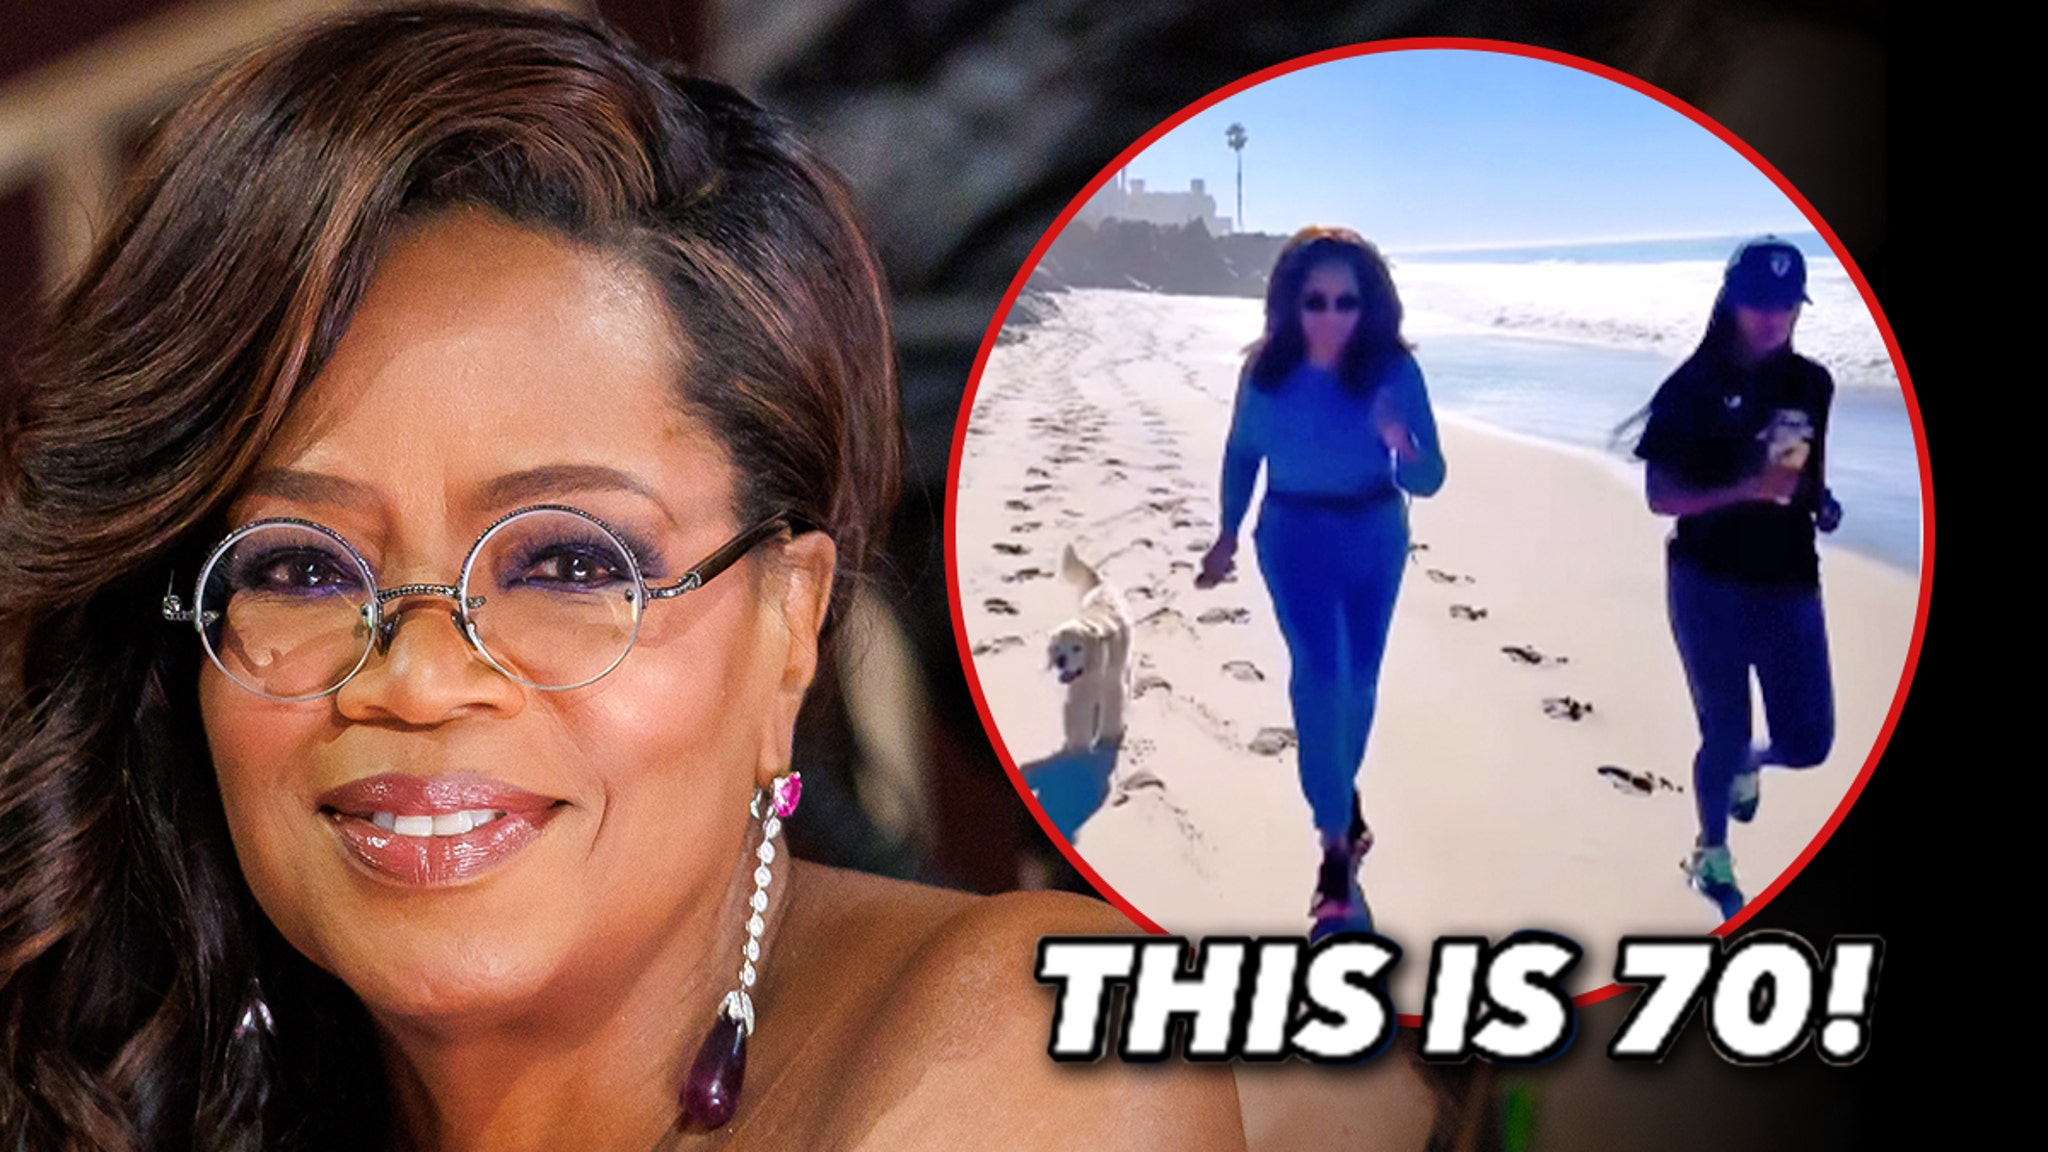 Oprah Winfrey Rings In 70th Birthday With Run on Beach